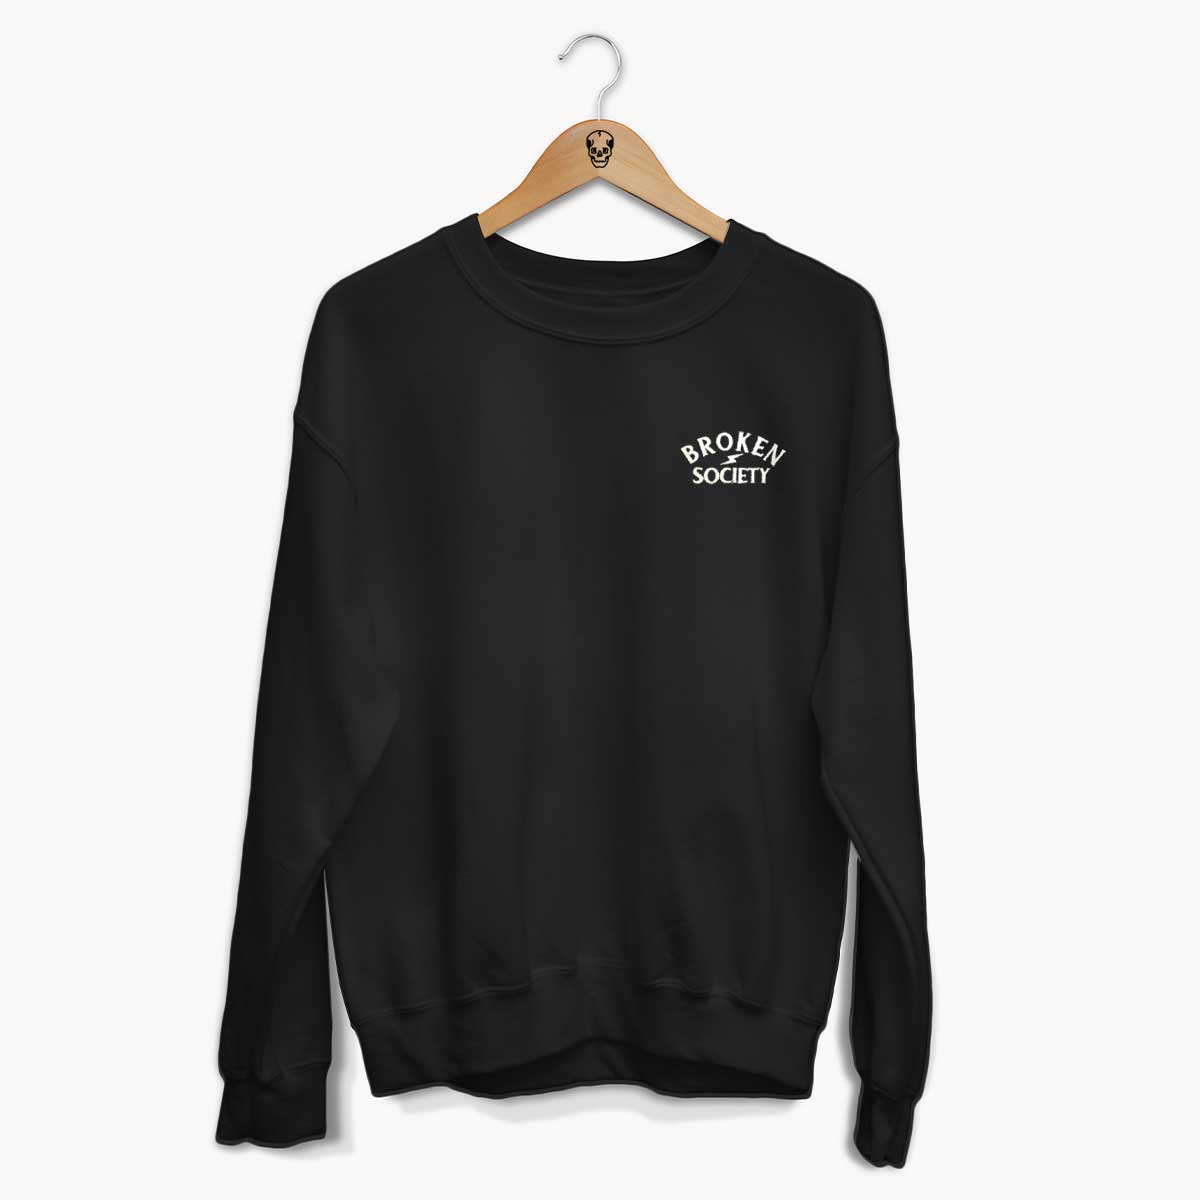 Broken Society Embroidered Sweatshirt (Unisex)